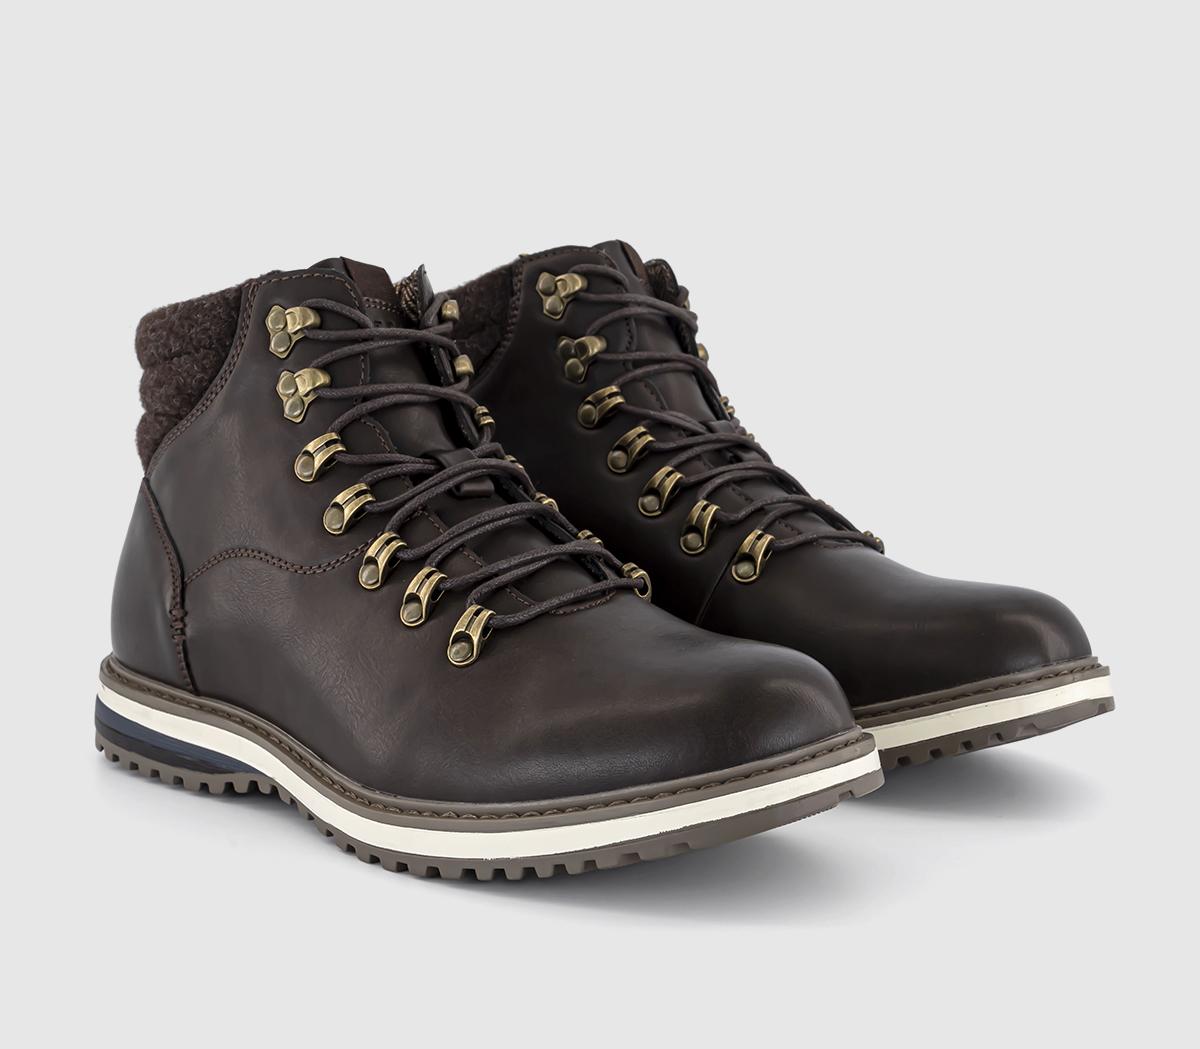 OFFICE Batley Hybrid Hiker Boots Brown - Men’s Boots